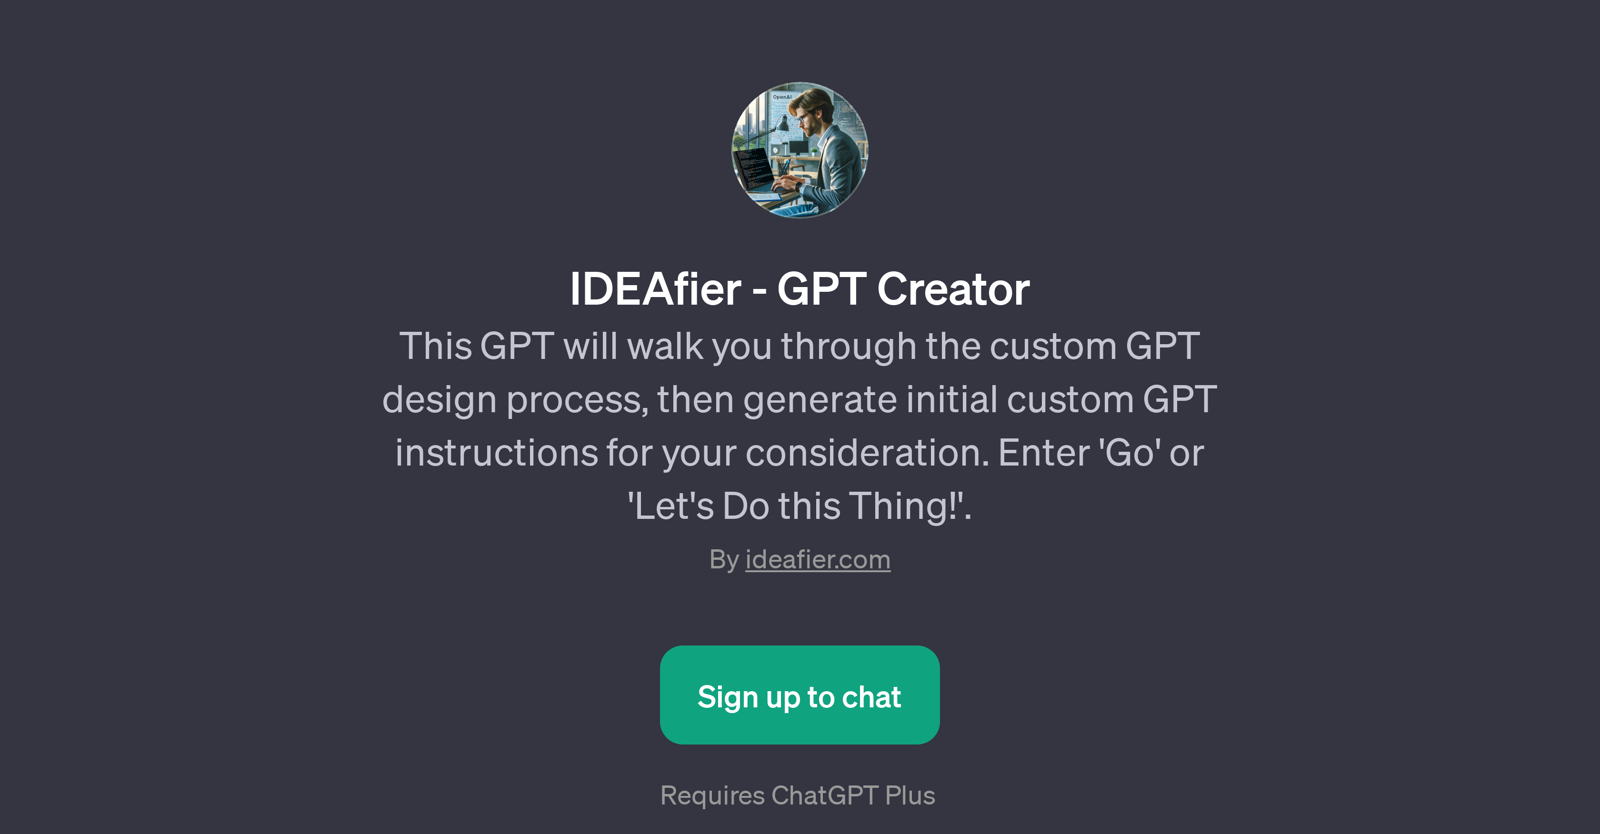 IDEAfier - GPT Creator website